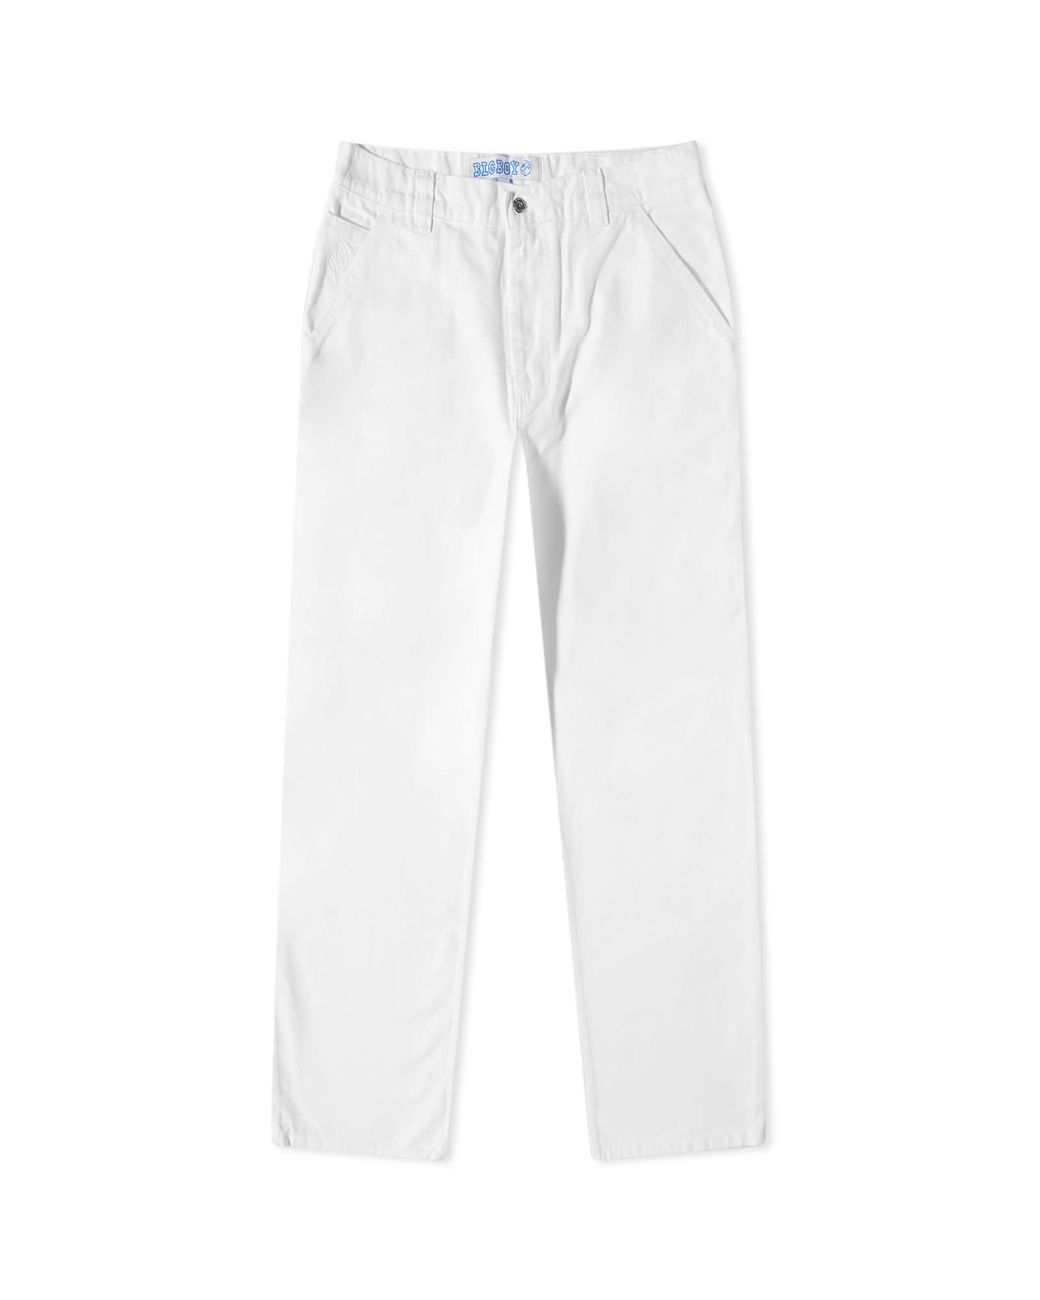 Calvin Klein Big Boys Pants in Big Boys 820 Clothing  Walmartcom